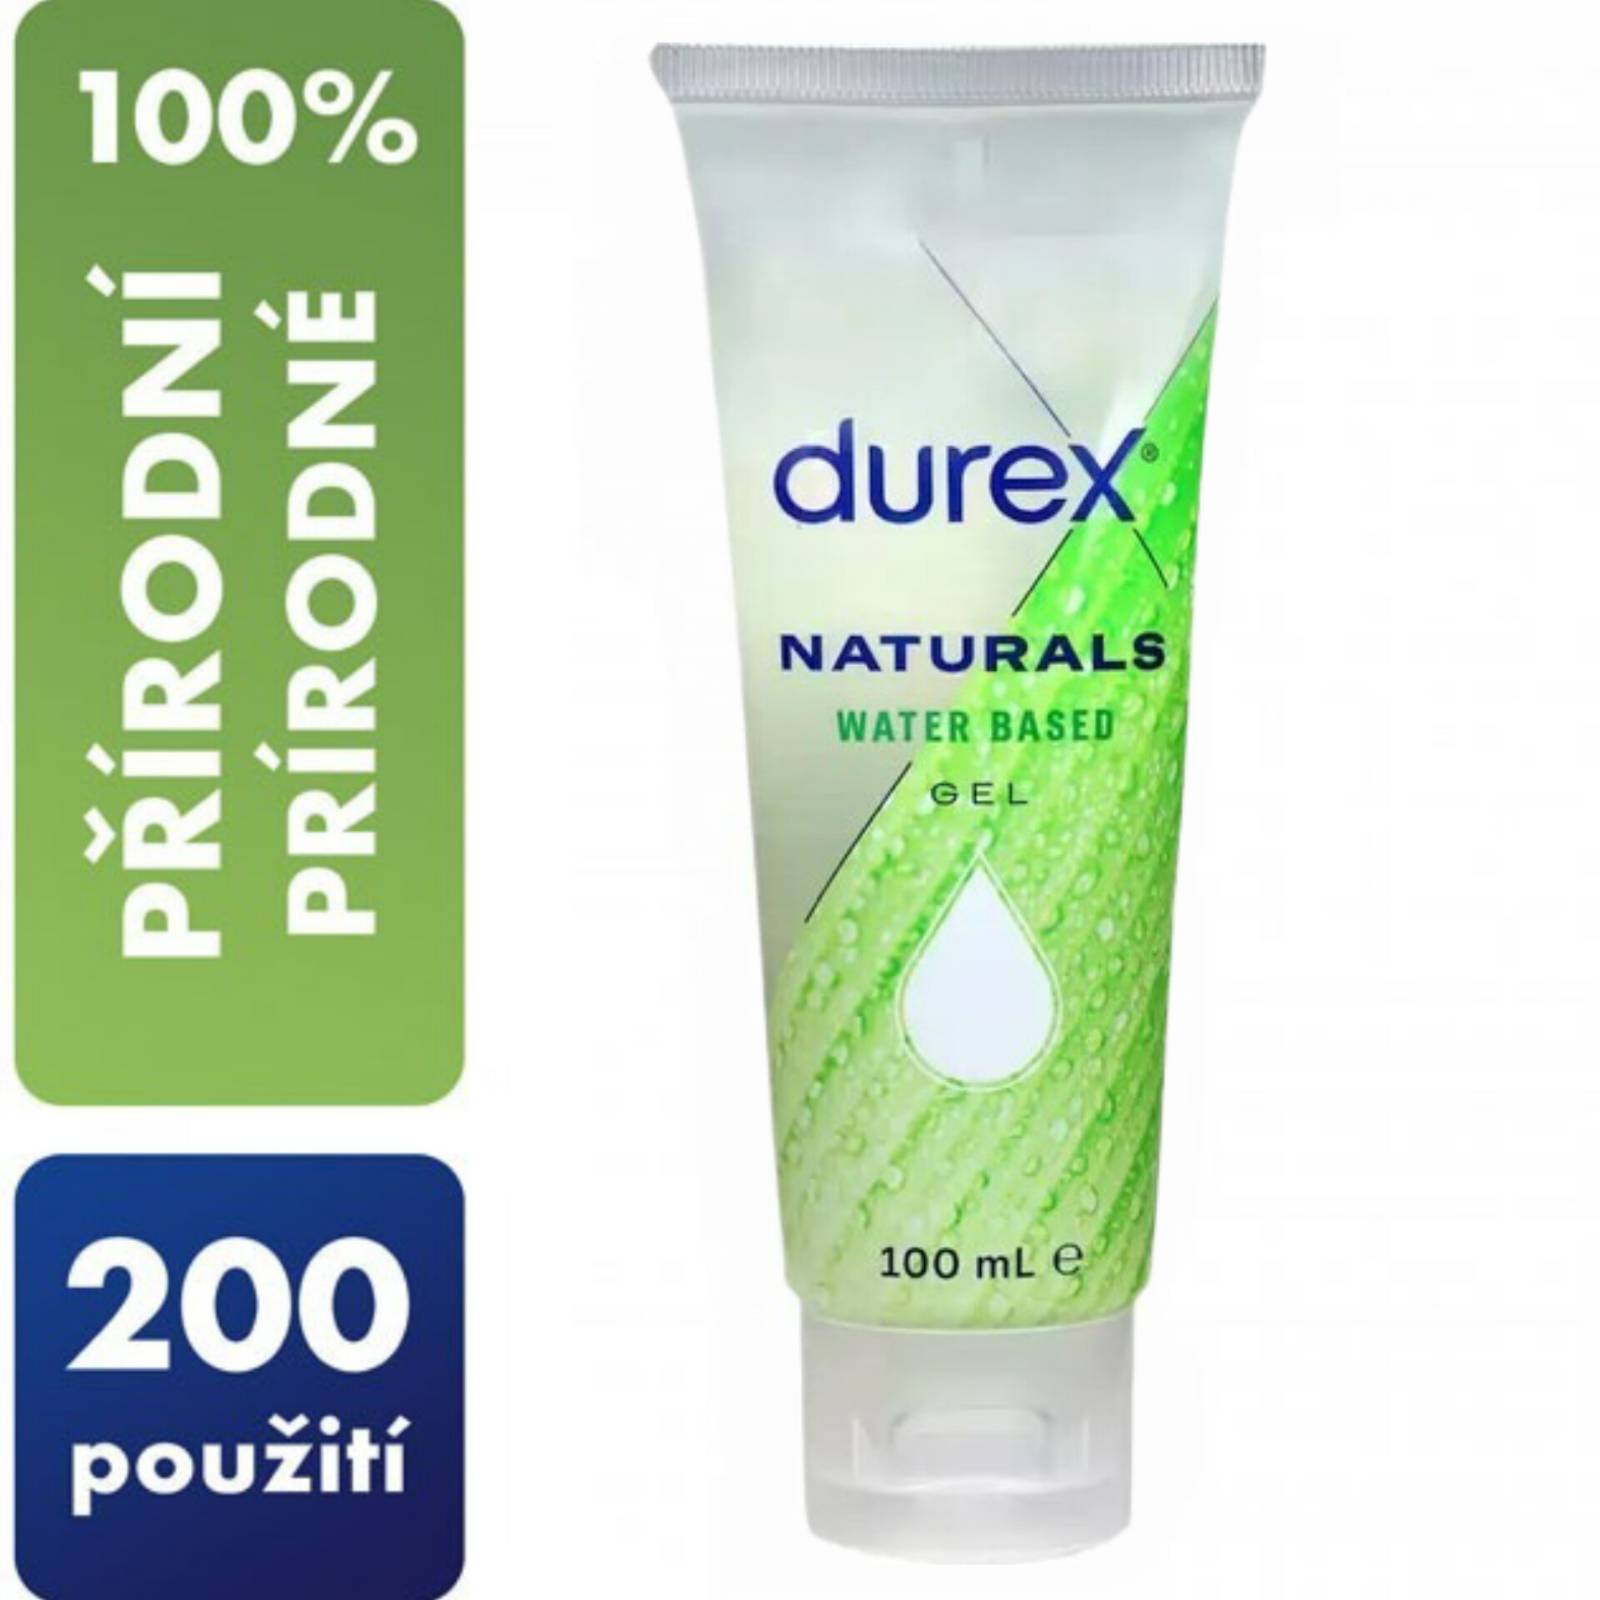 Durex Naturals lubrikační gel 